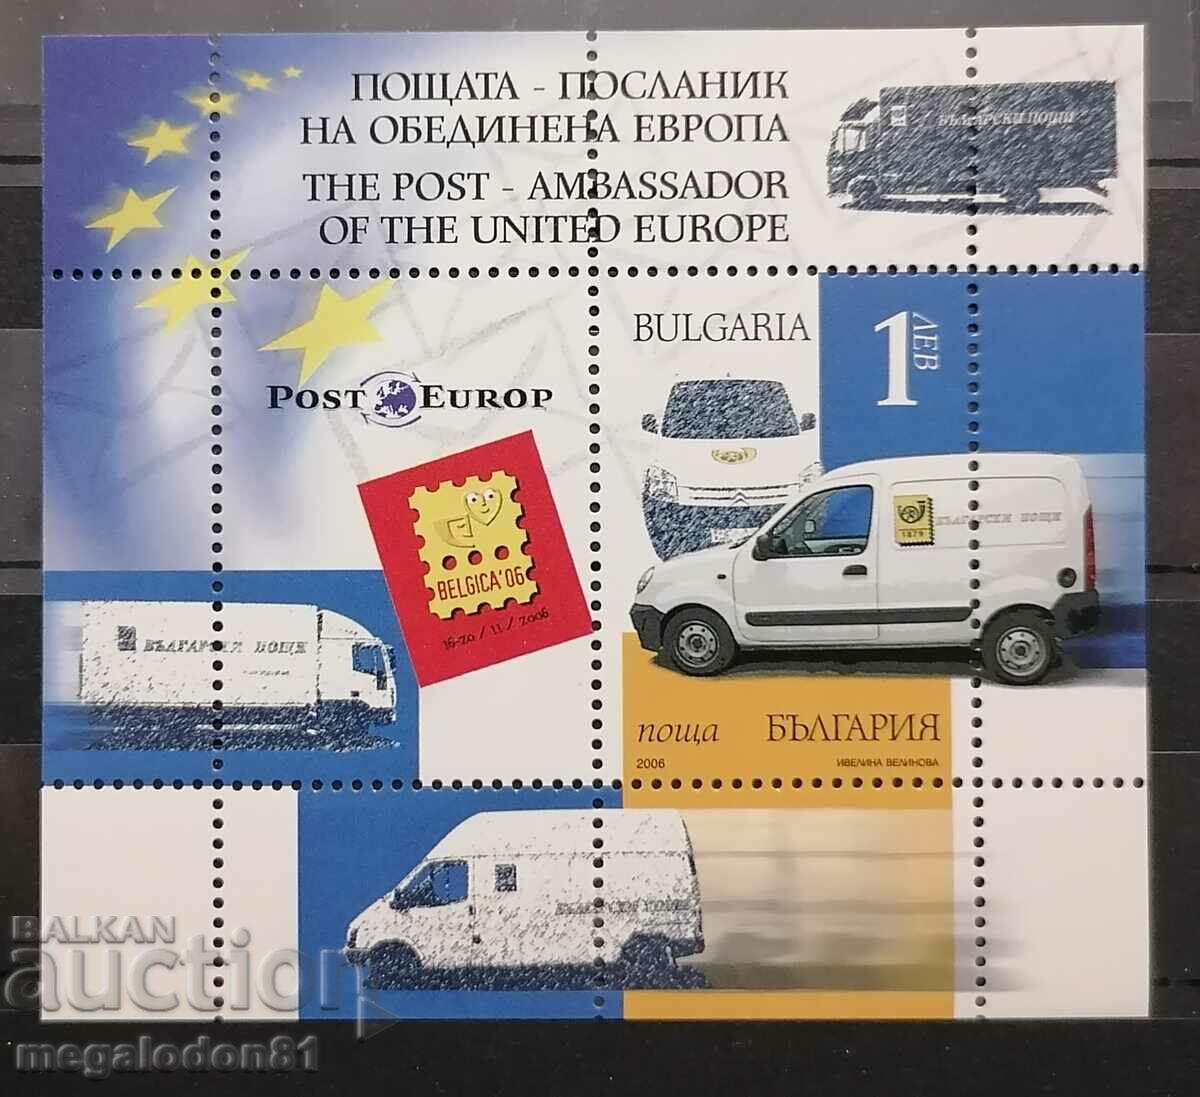 Bulgaria - postal ambassador of the united Europe